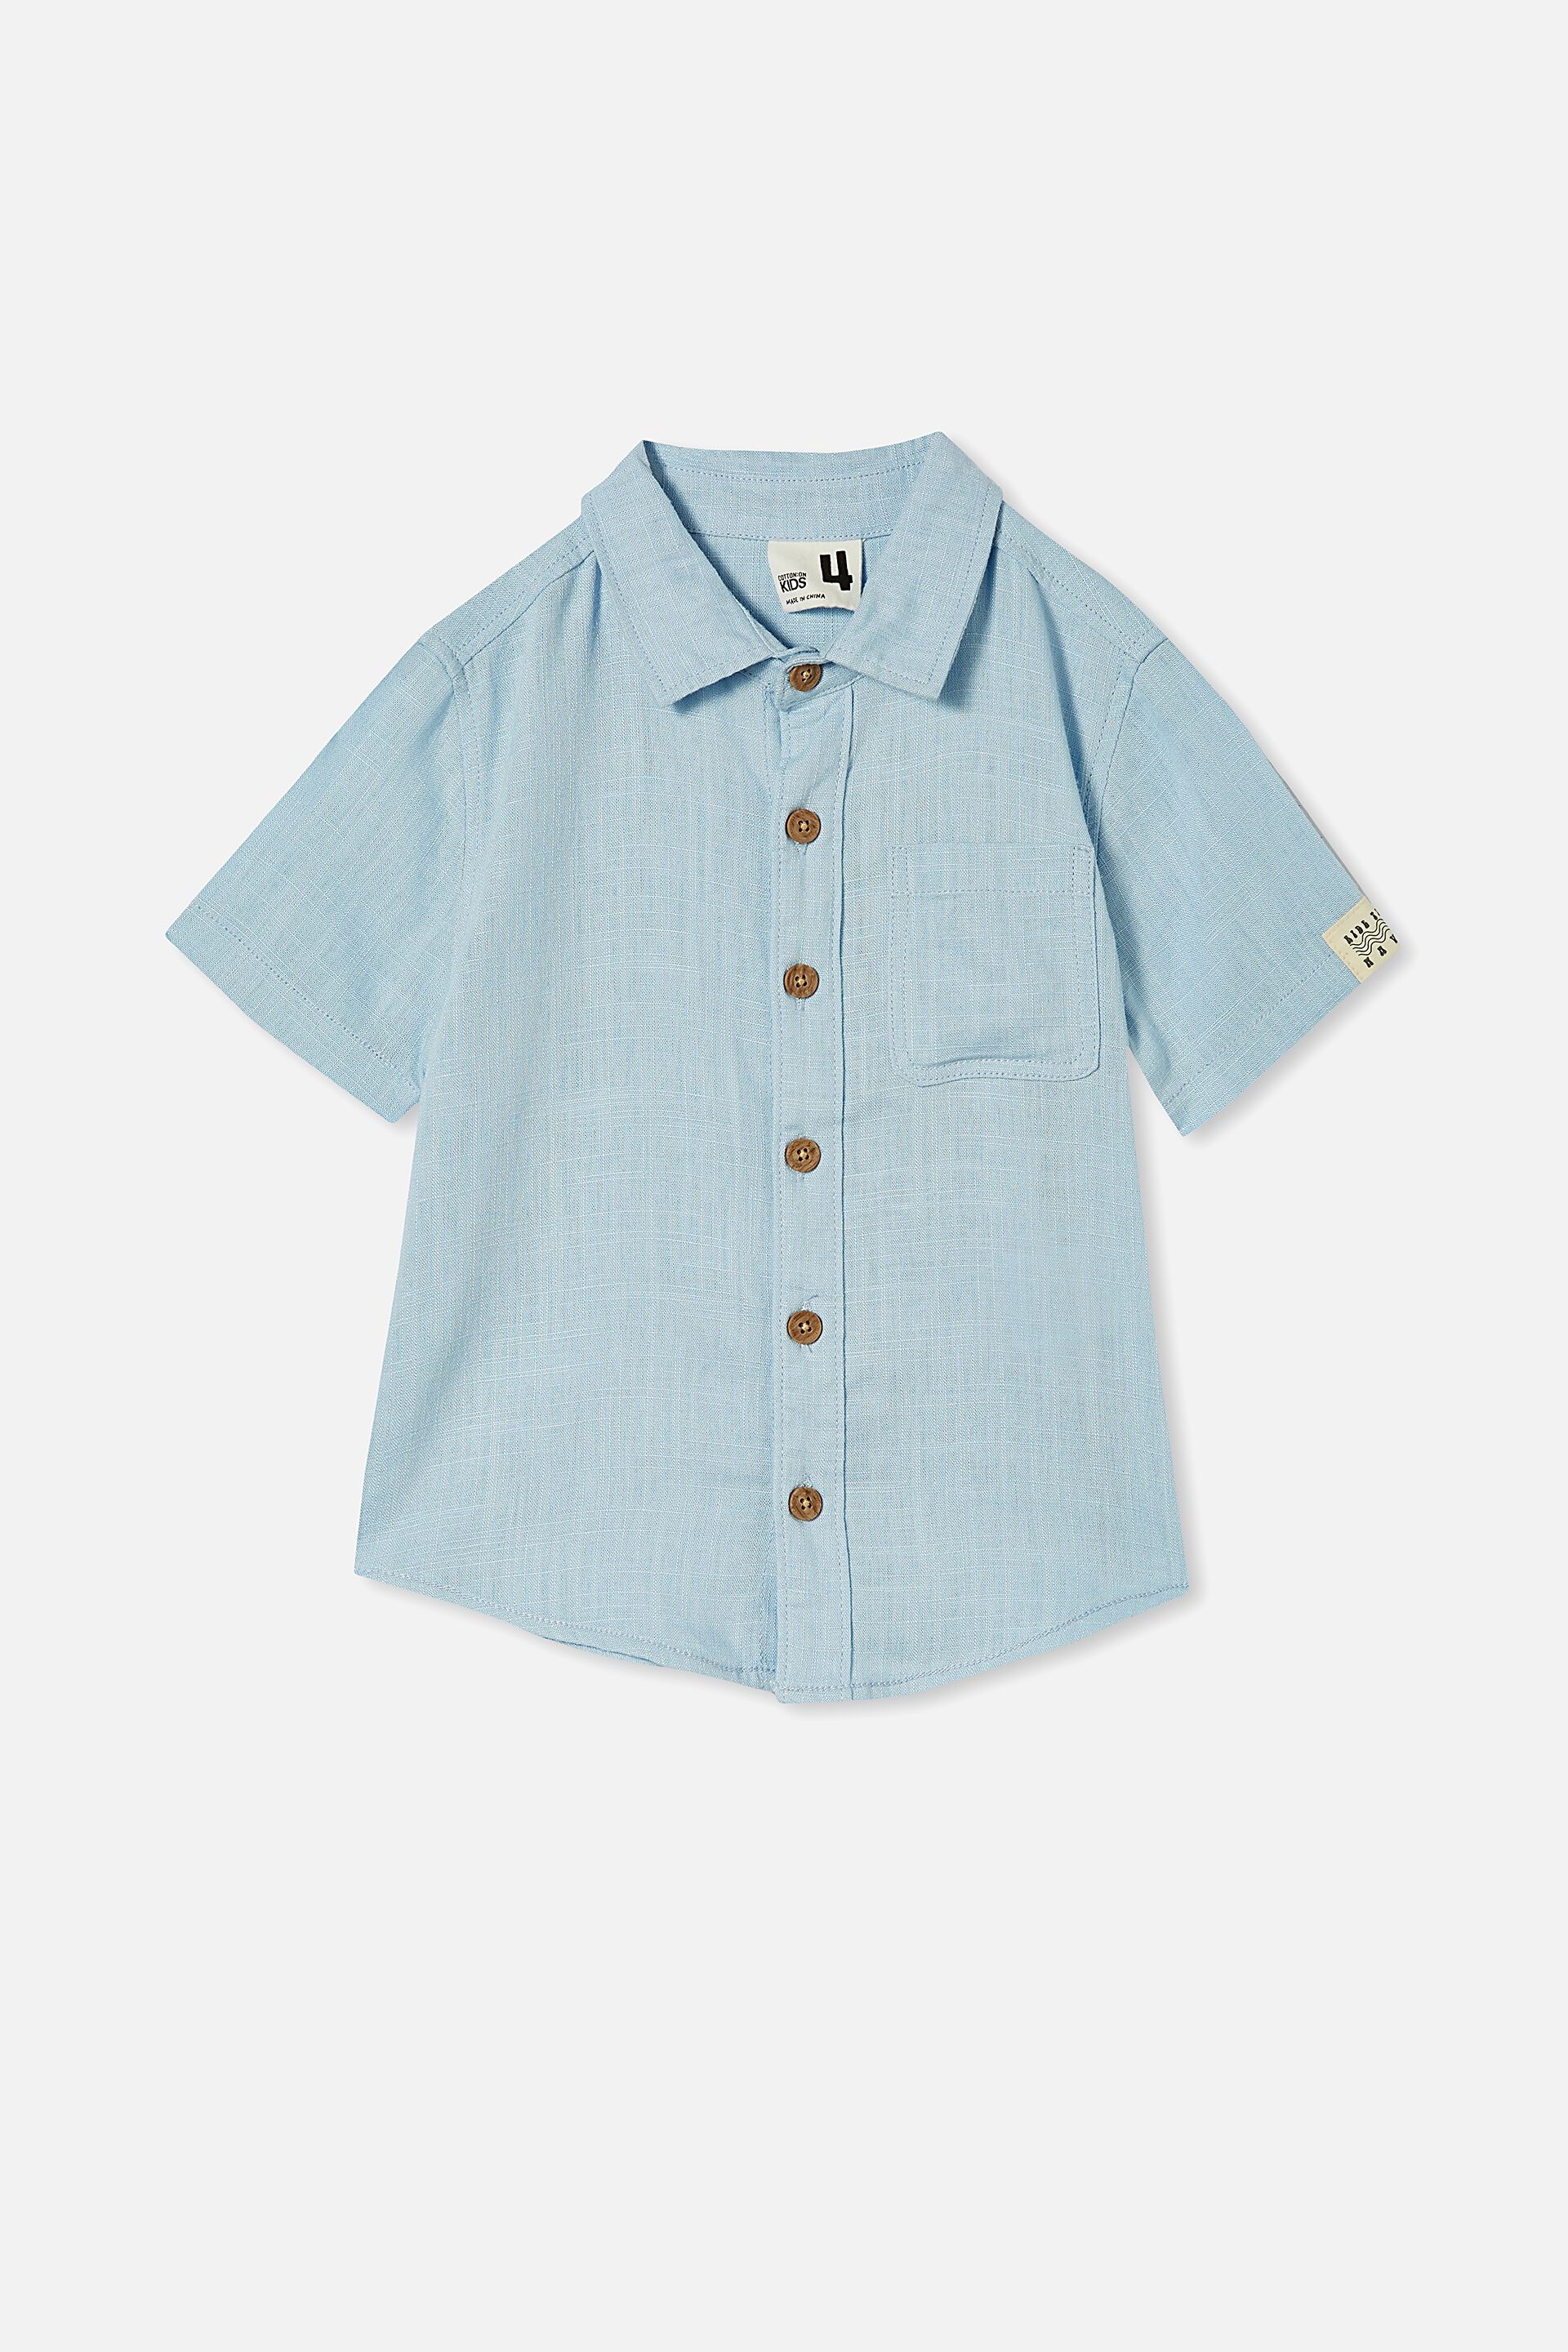 Jooni Boys' Sky Blue Cotton Collarless Shirt